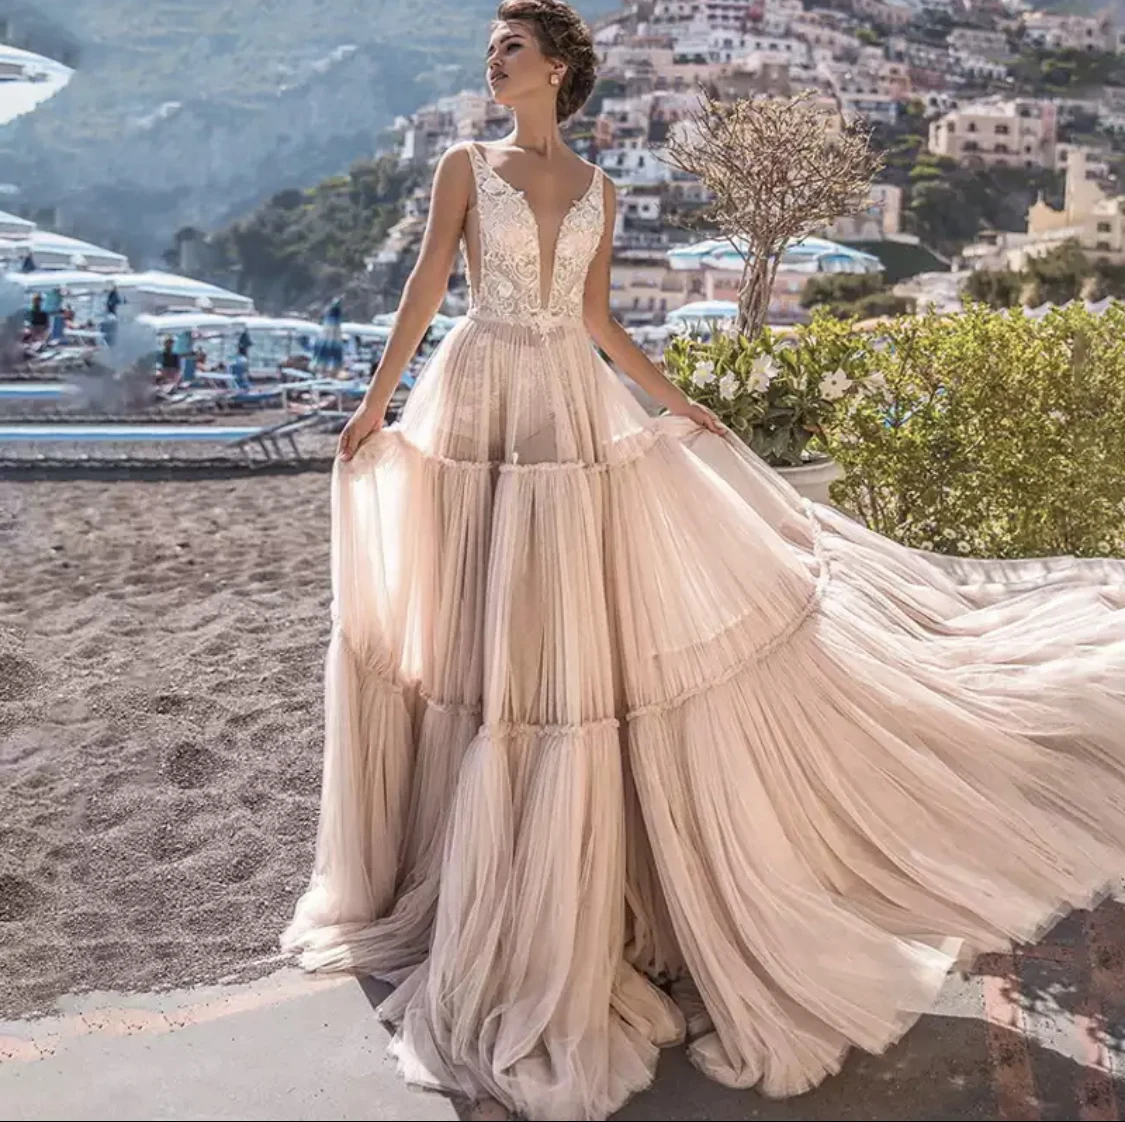 

Bohemian Champagne A-Line Wedding Dress 2021 V-Neck Lace Appliques Backless Sweep Train Dreamy Bride Gown Vestidos De Noiva